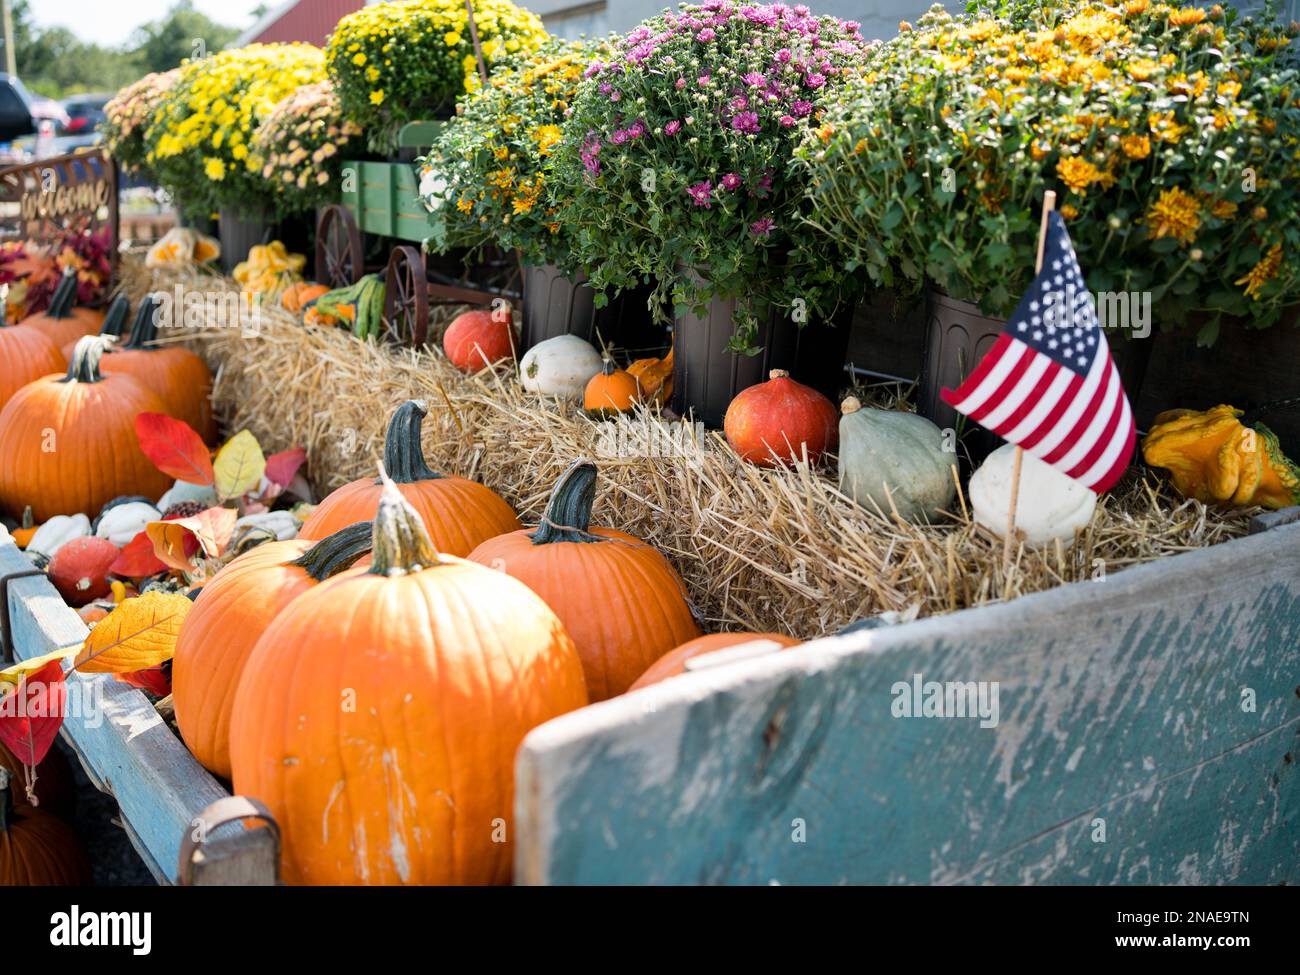 Fall wagon full of pumpkins and mums Stock Photo